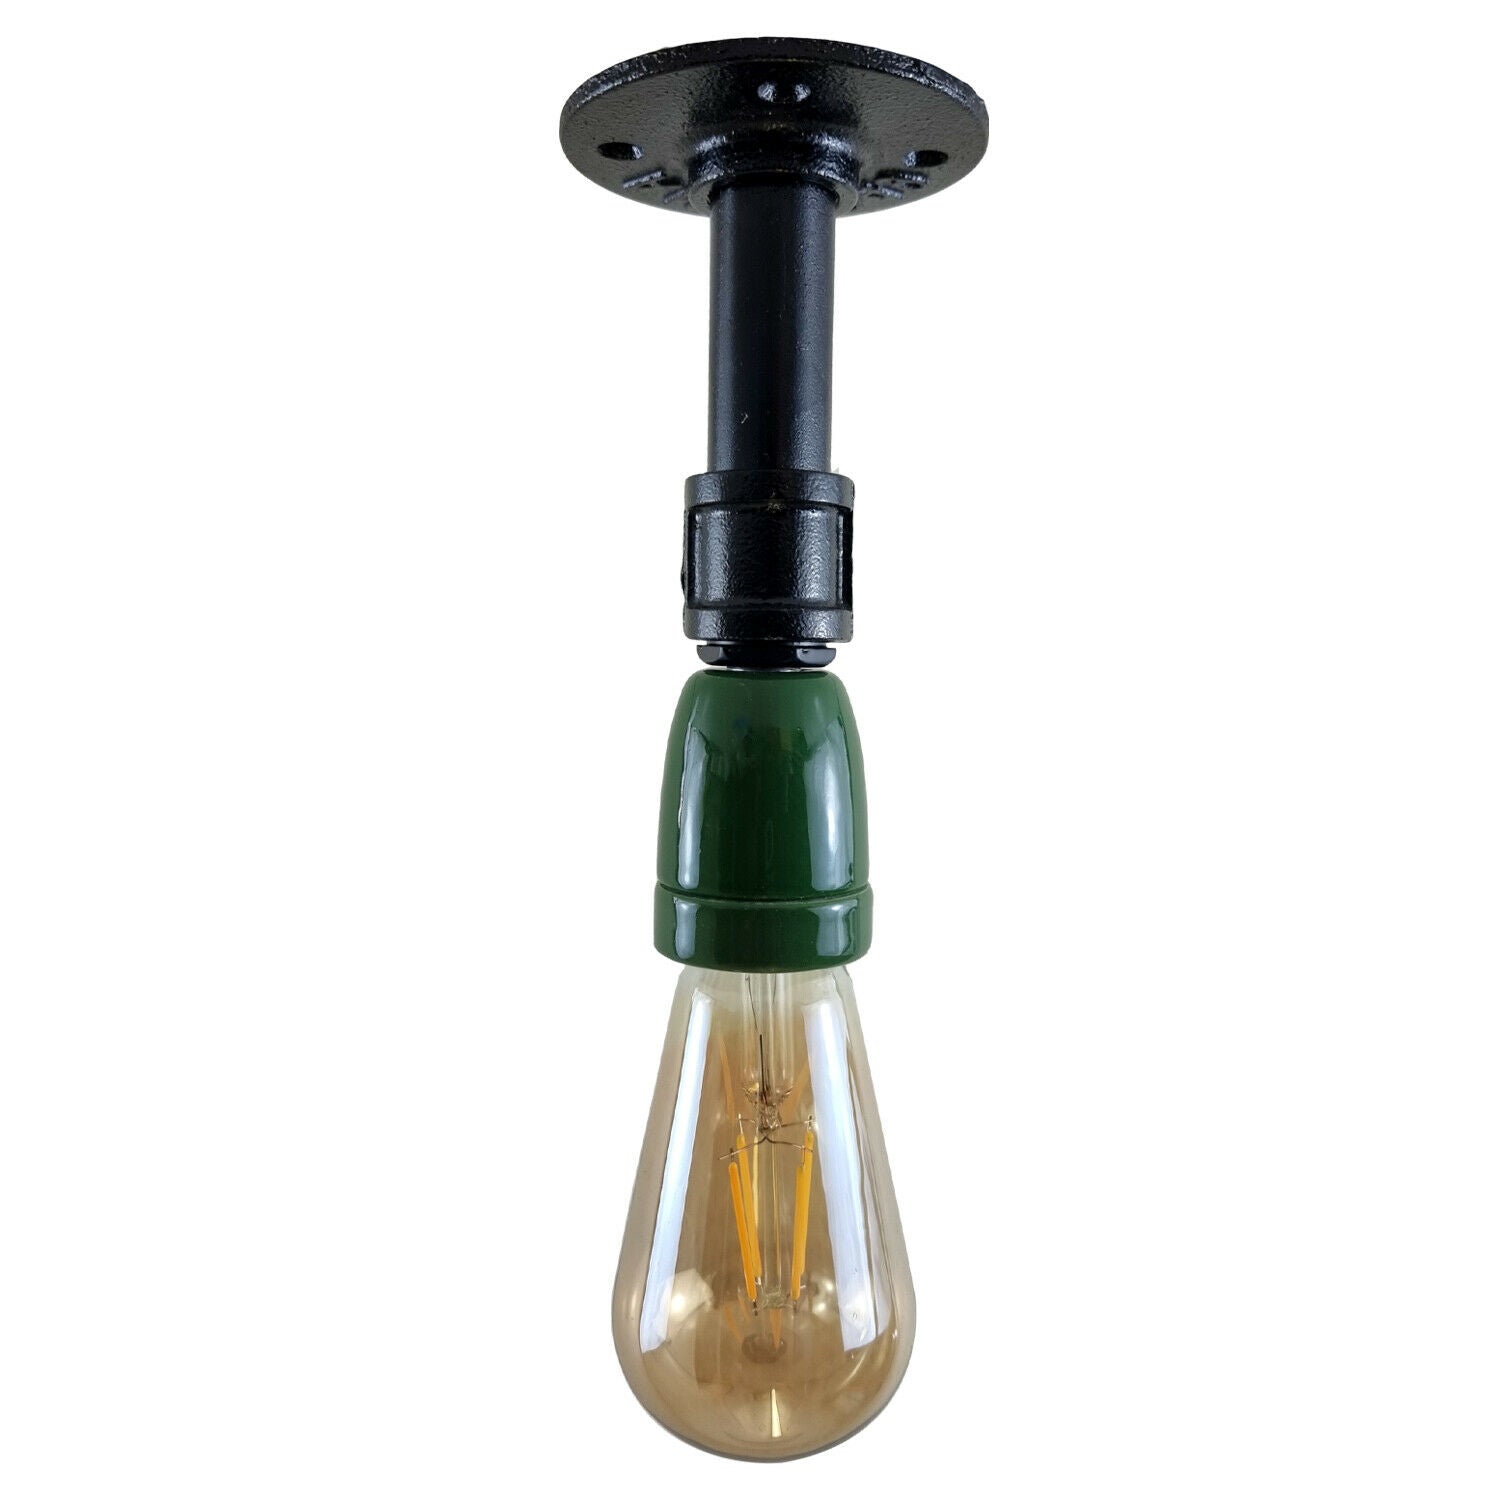 Vintage Industrial E27 Holder Black and Green Ceiling Light Fitting Flush Pipe Vintage Lighting~3622 - LEDSone UK Ltd